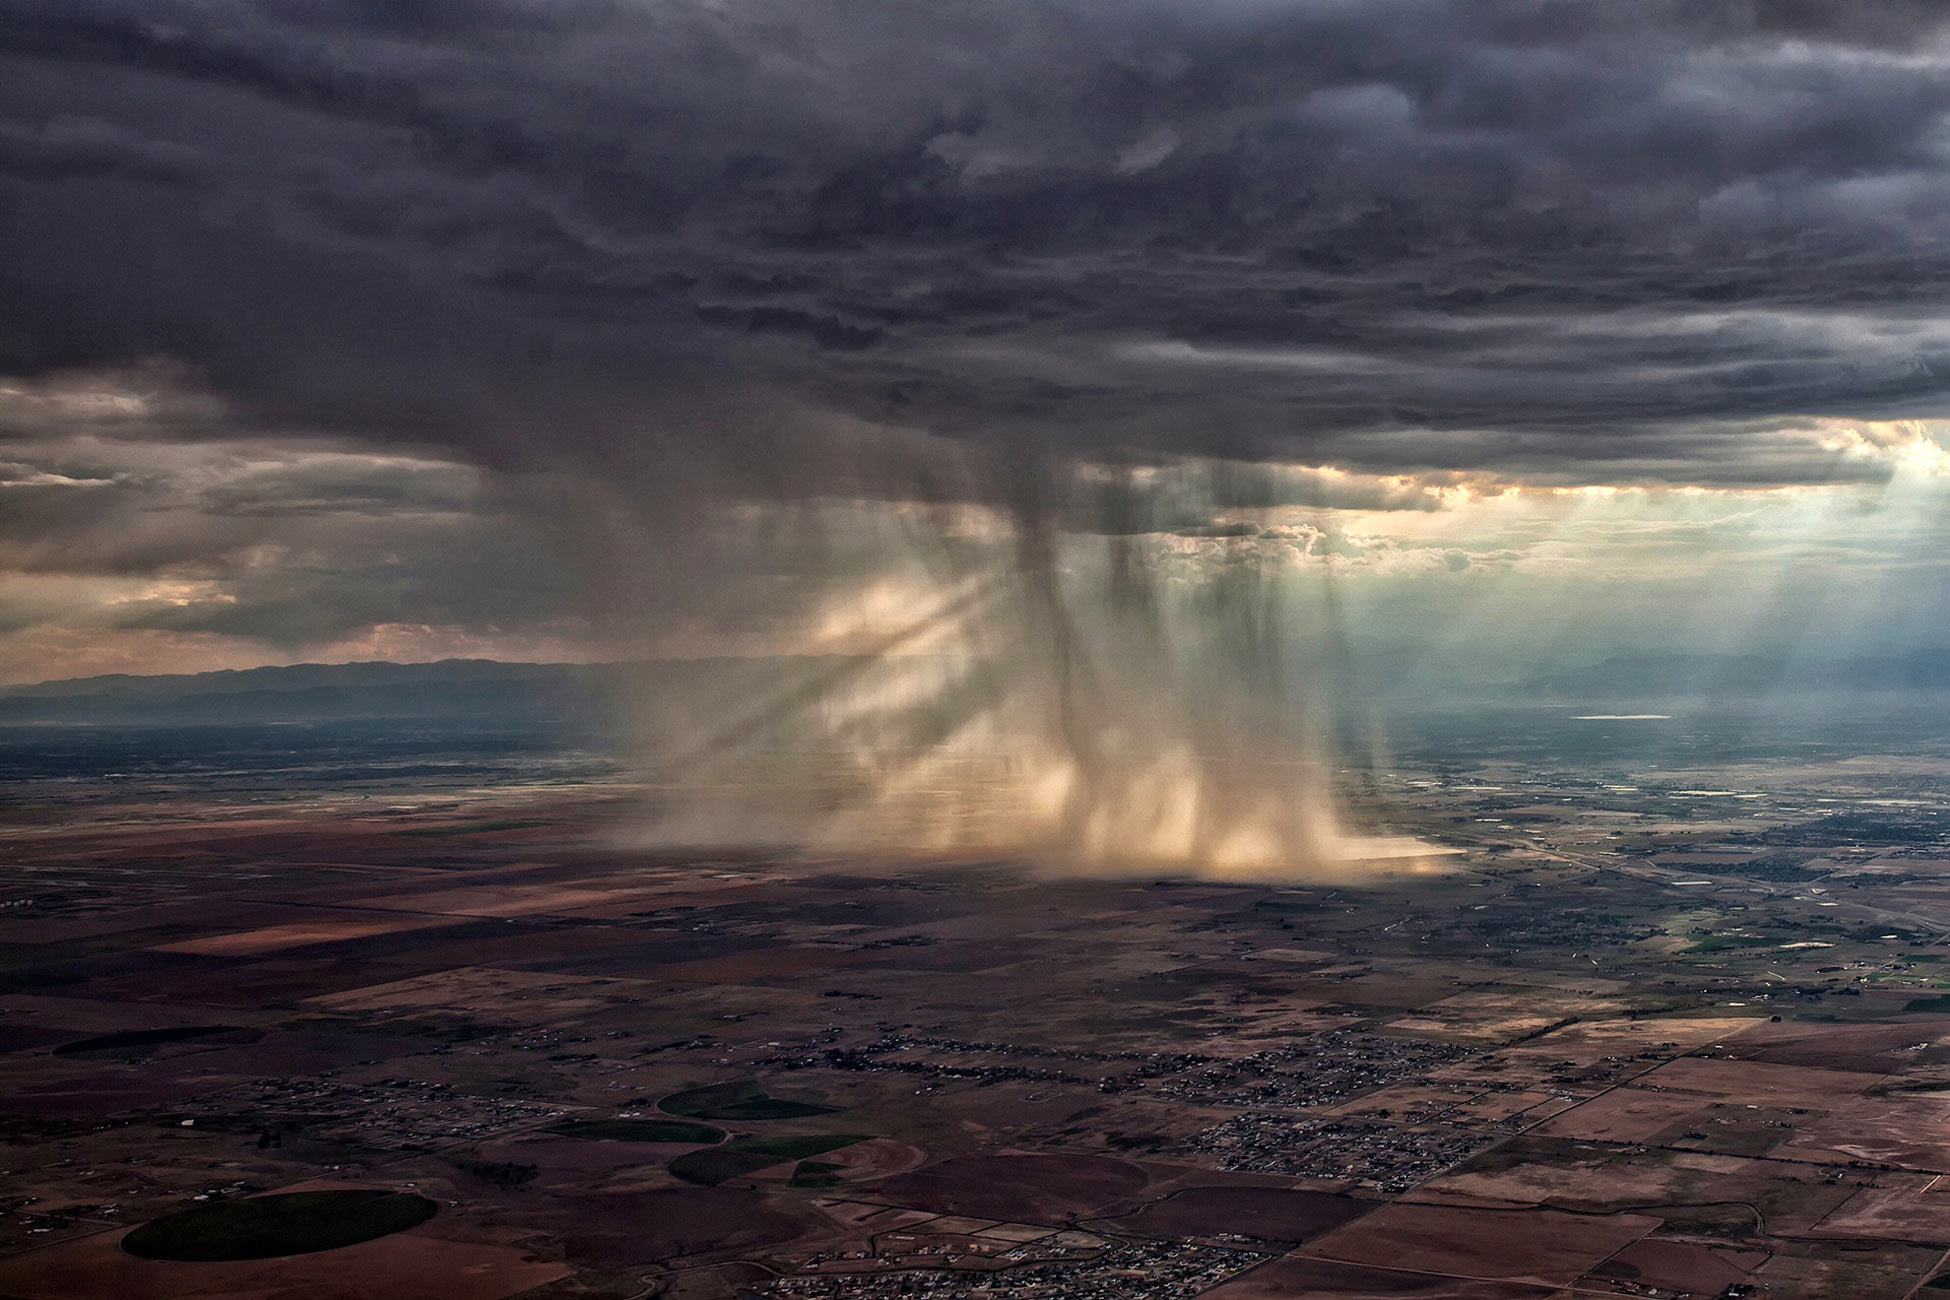 rain cloud from airplane